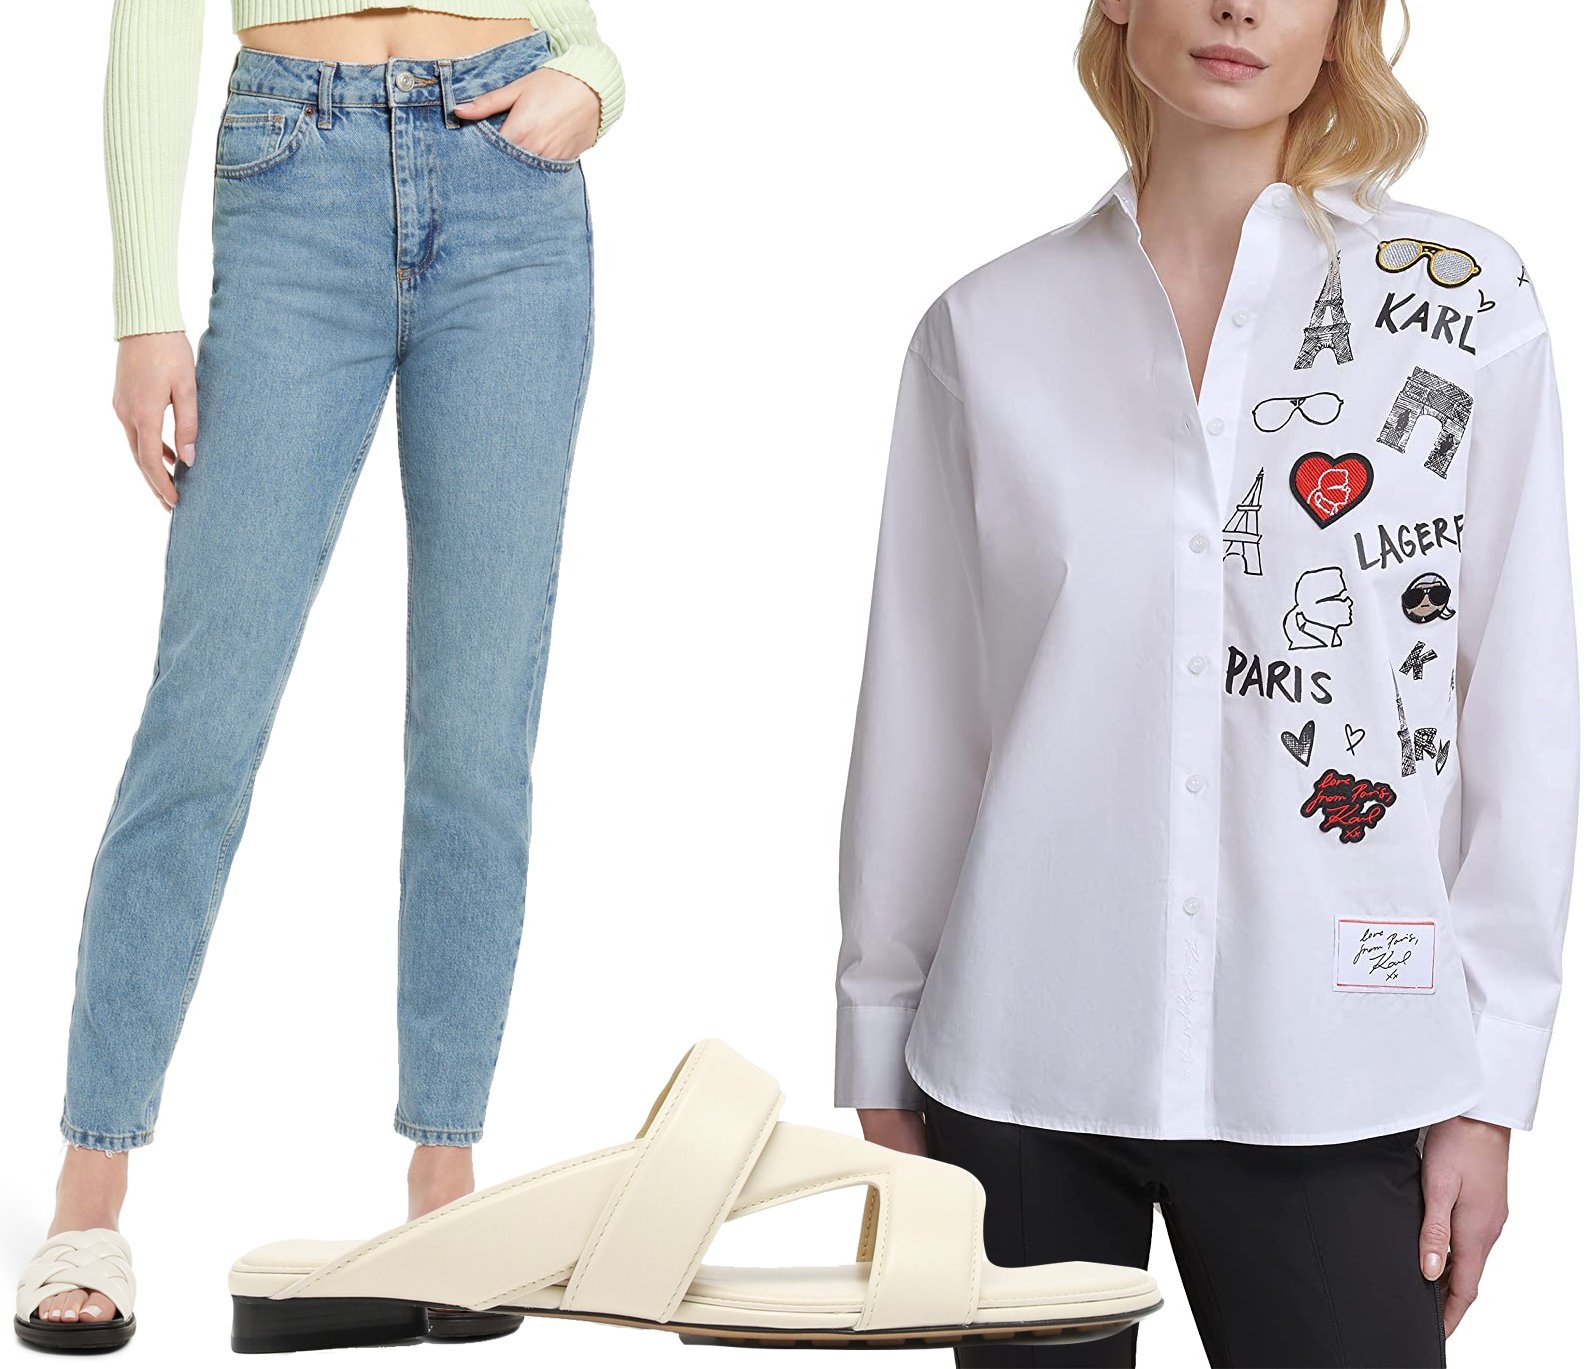 BDG Urban Outfitters High-waisted mom jeans, Karl Lagerfeld white shirt Gorgeous style logo, Bottega Veneta leather crossbody skates